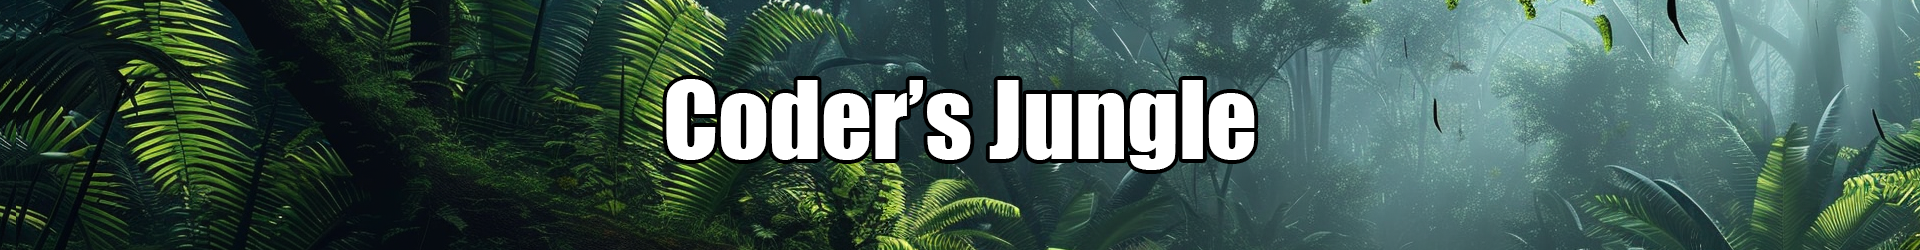 Coder's Jungle